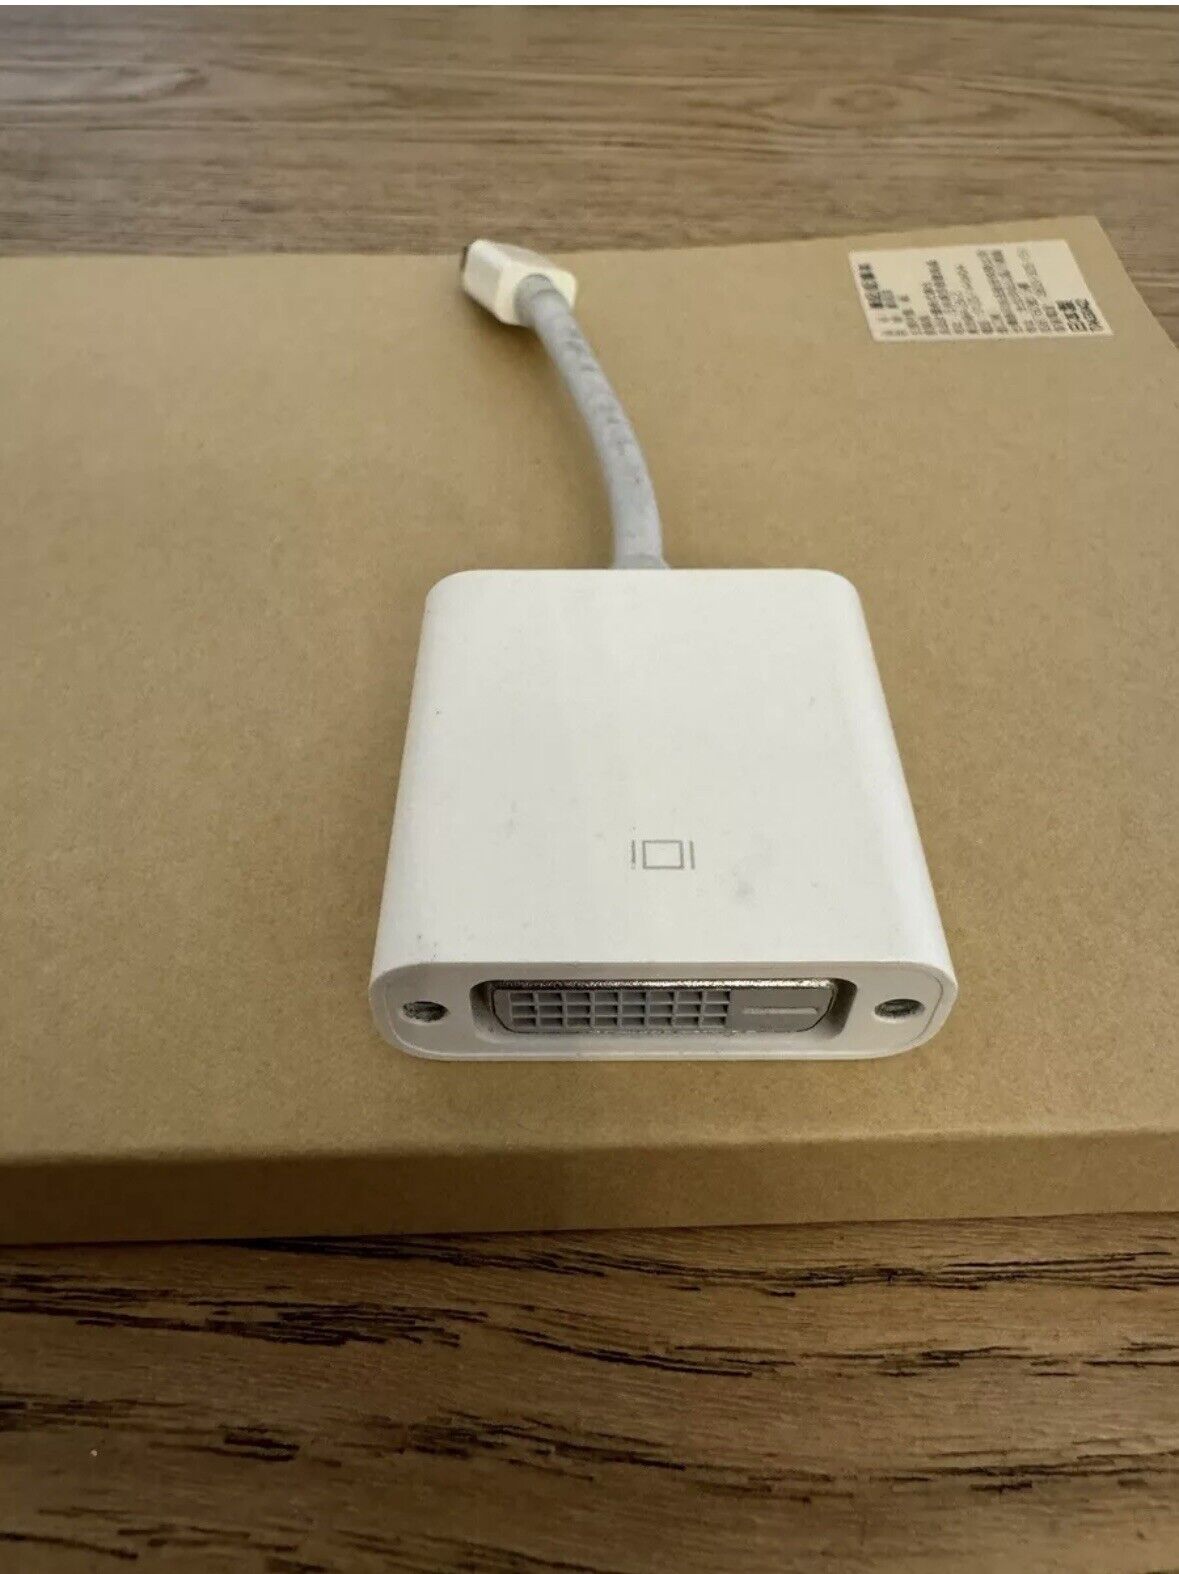 Apple A1305 Thunderbolt Mini DisplayPort to DVI Cable Monitor Adapter Genuine